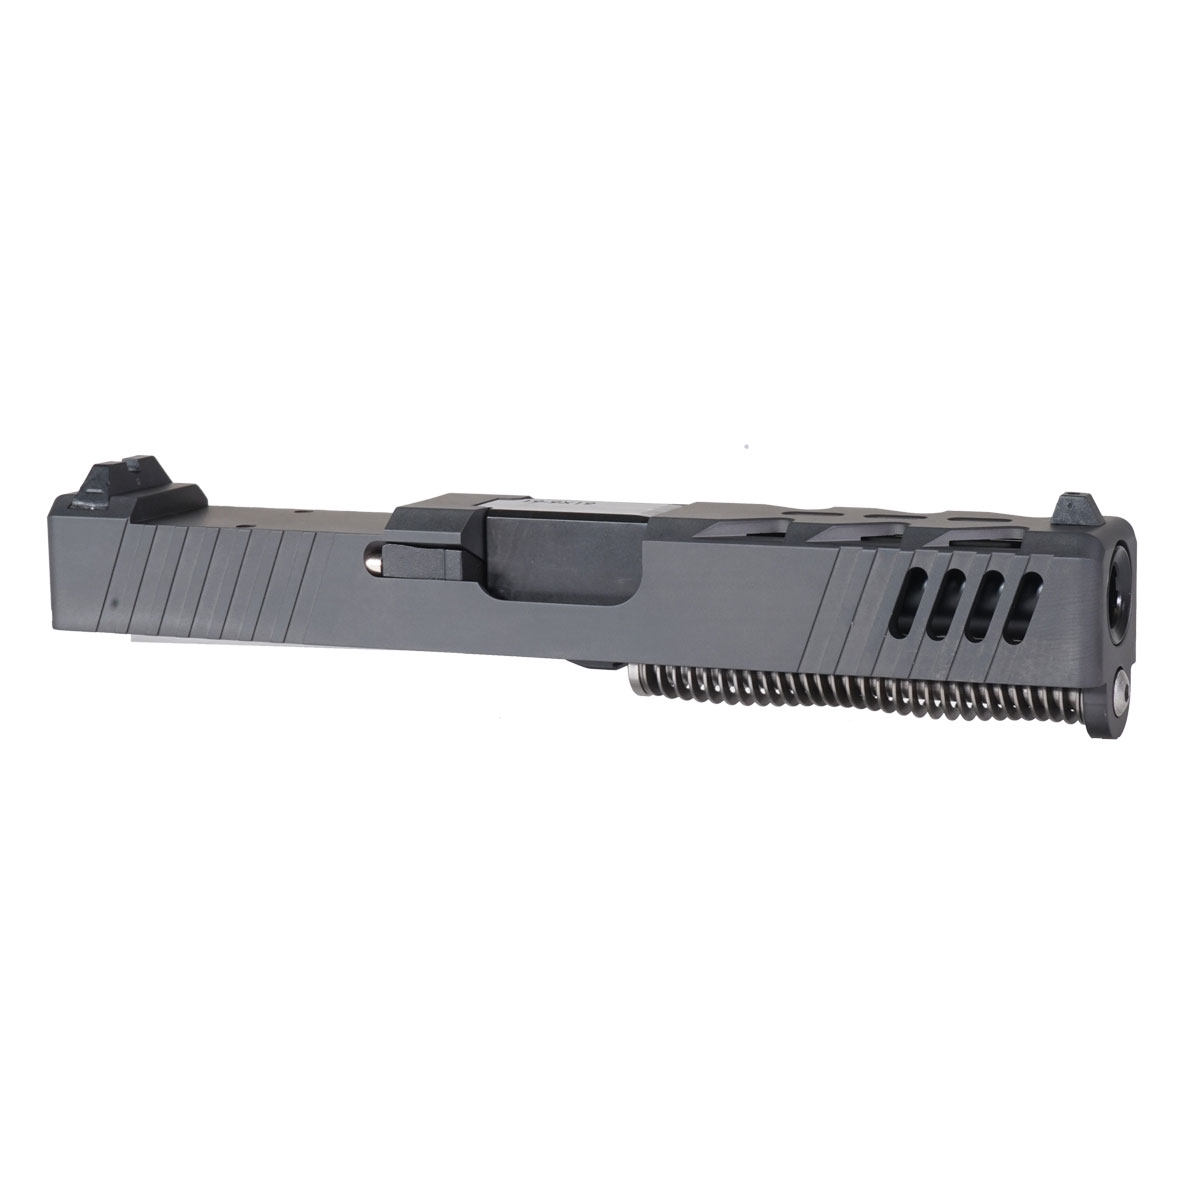 DTT 'The Yiker' 9mm Complete Slide Kit - Glock 19 Gen 1-3 Compatible